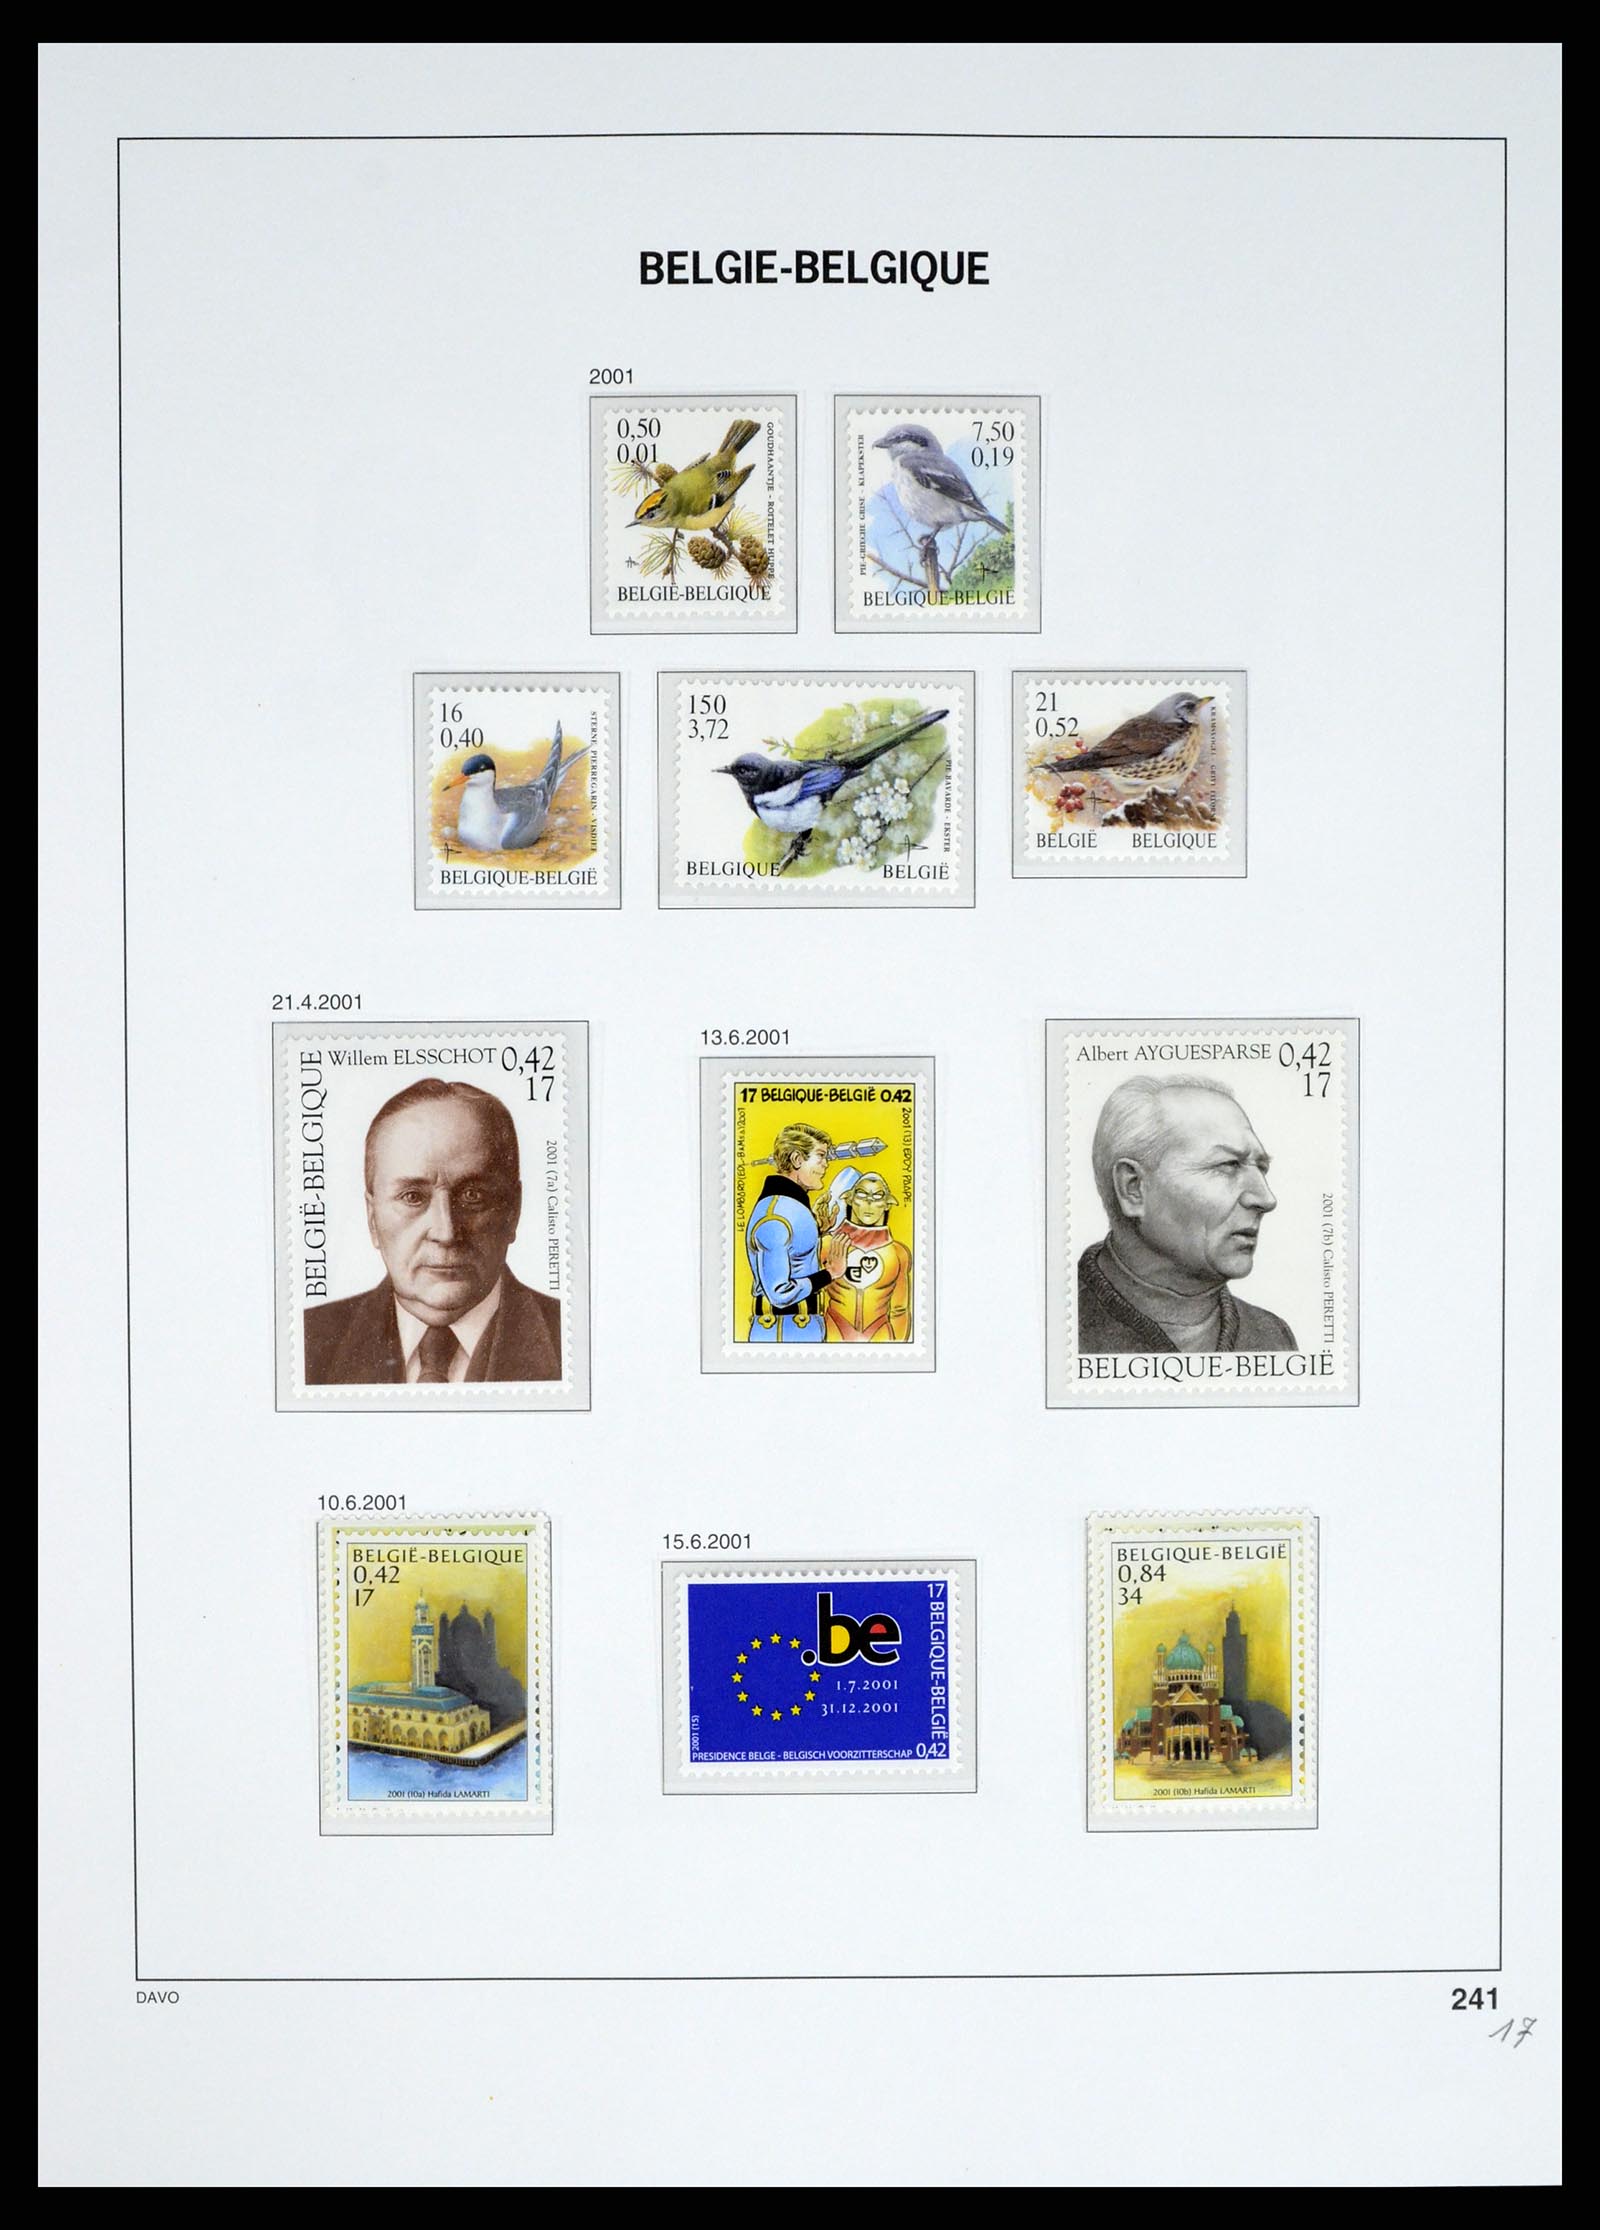 37367 283 - Stamp collection 37367 Belgium 1849-2003.